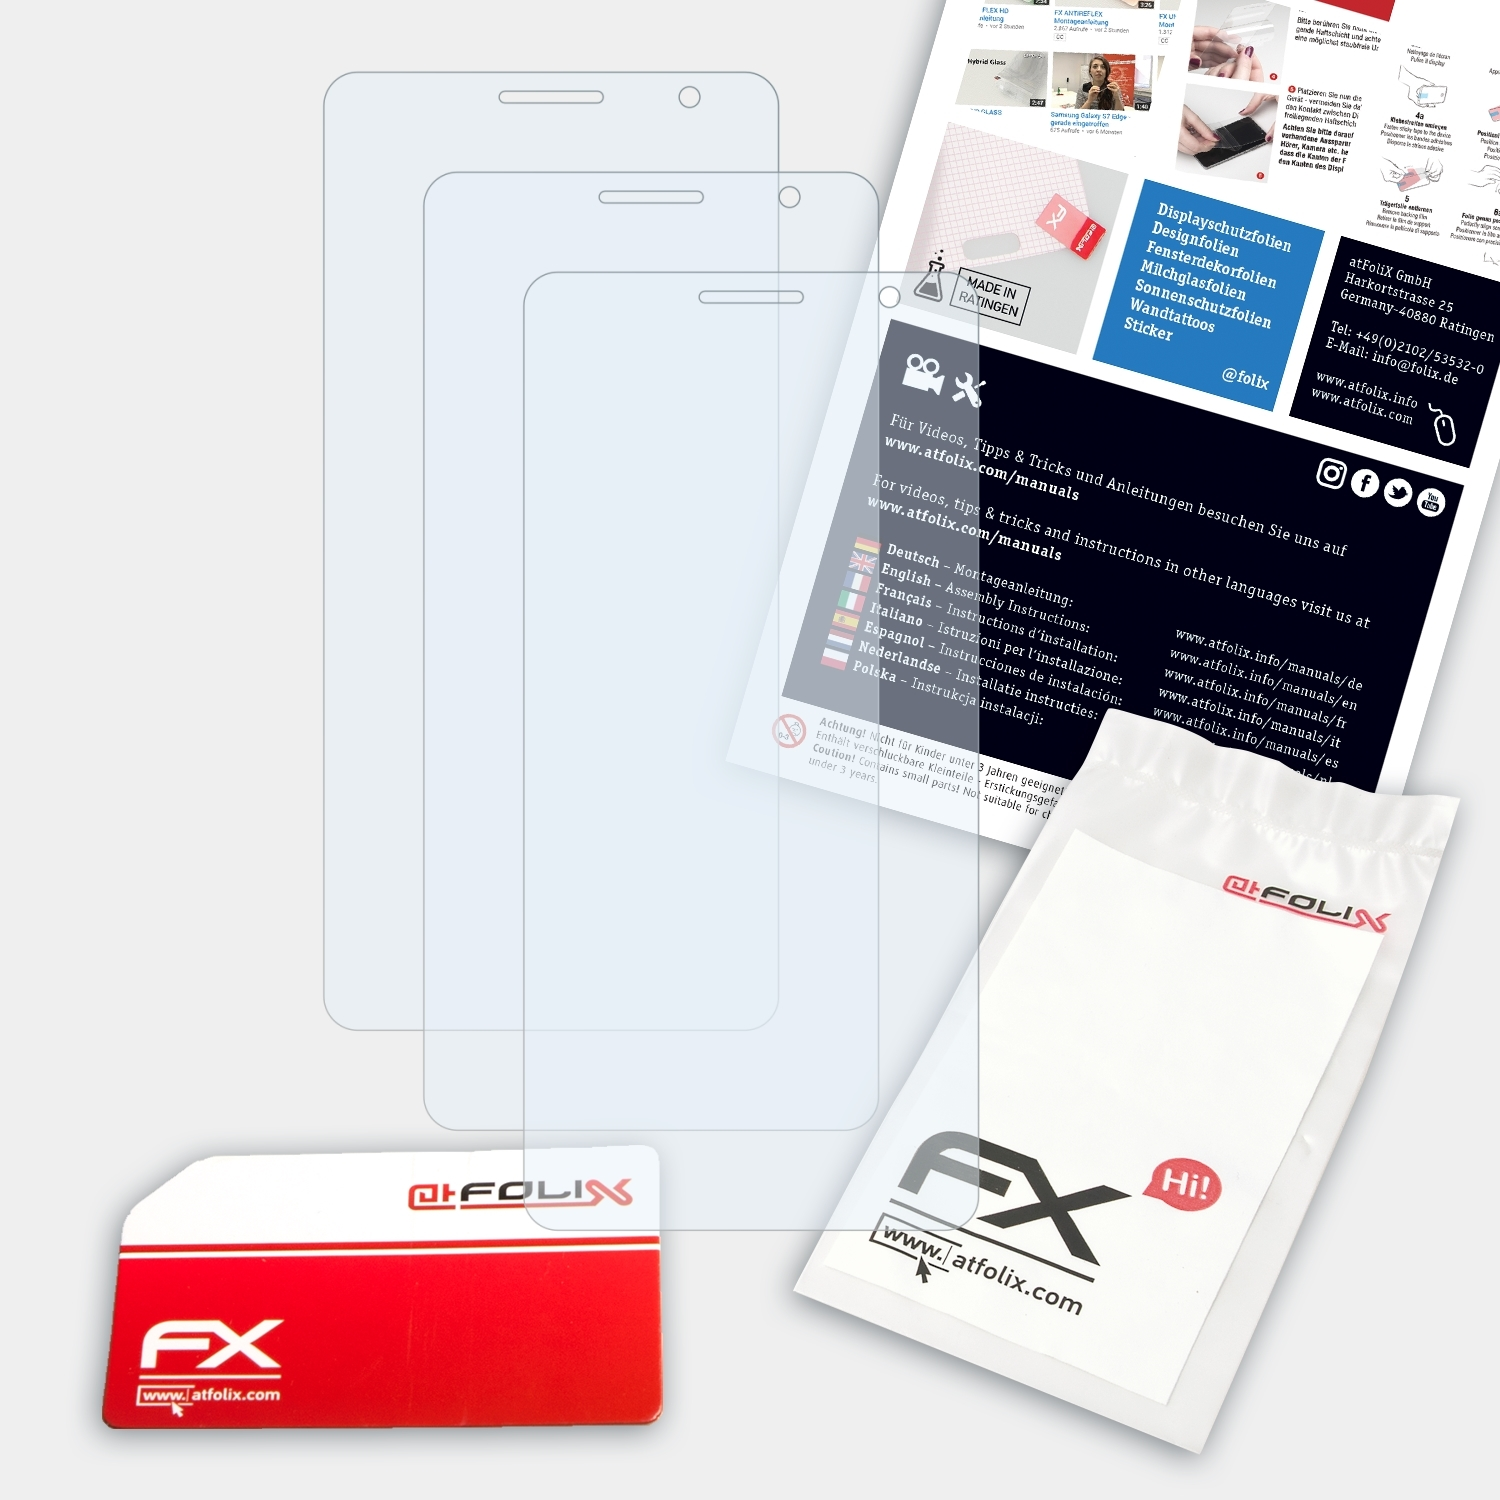 ATFOLIX 3x FX-Clear Displayschutz(für TCL 303)